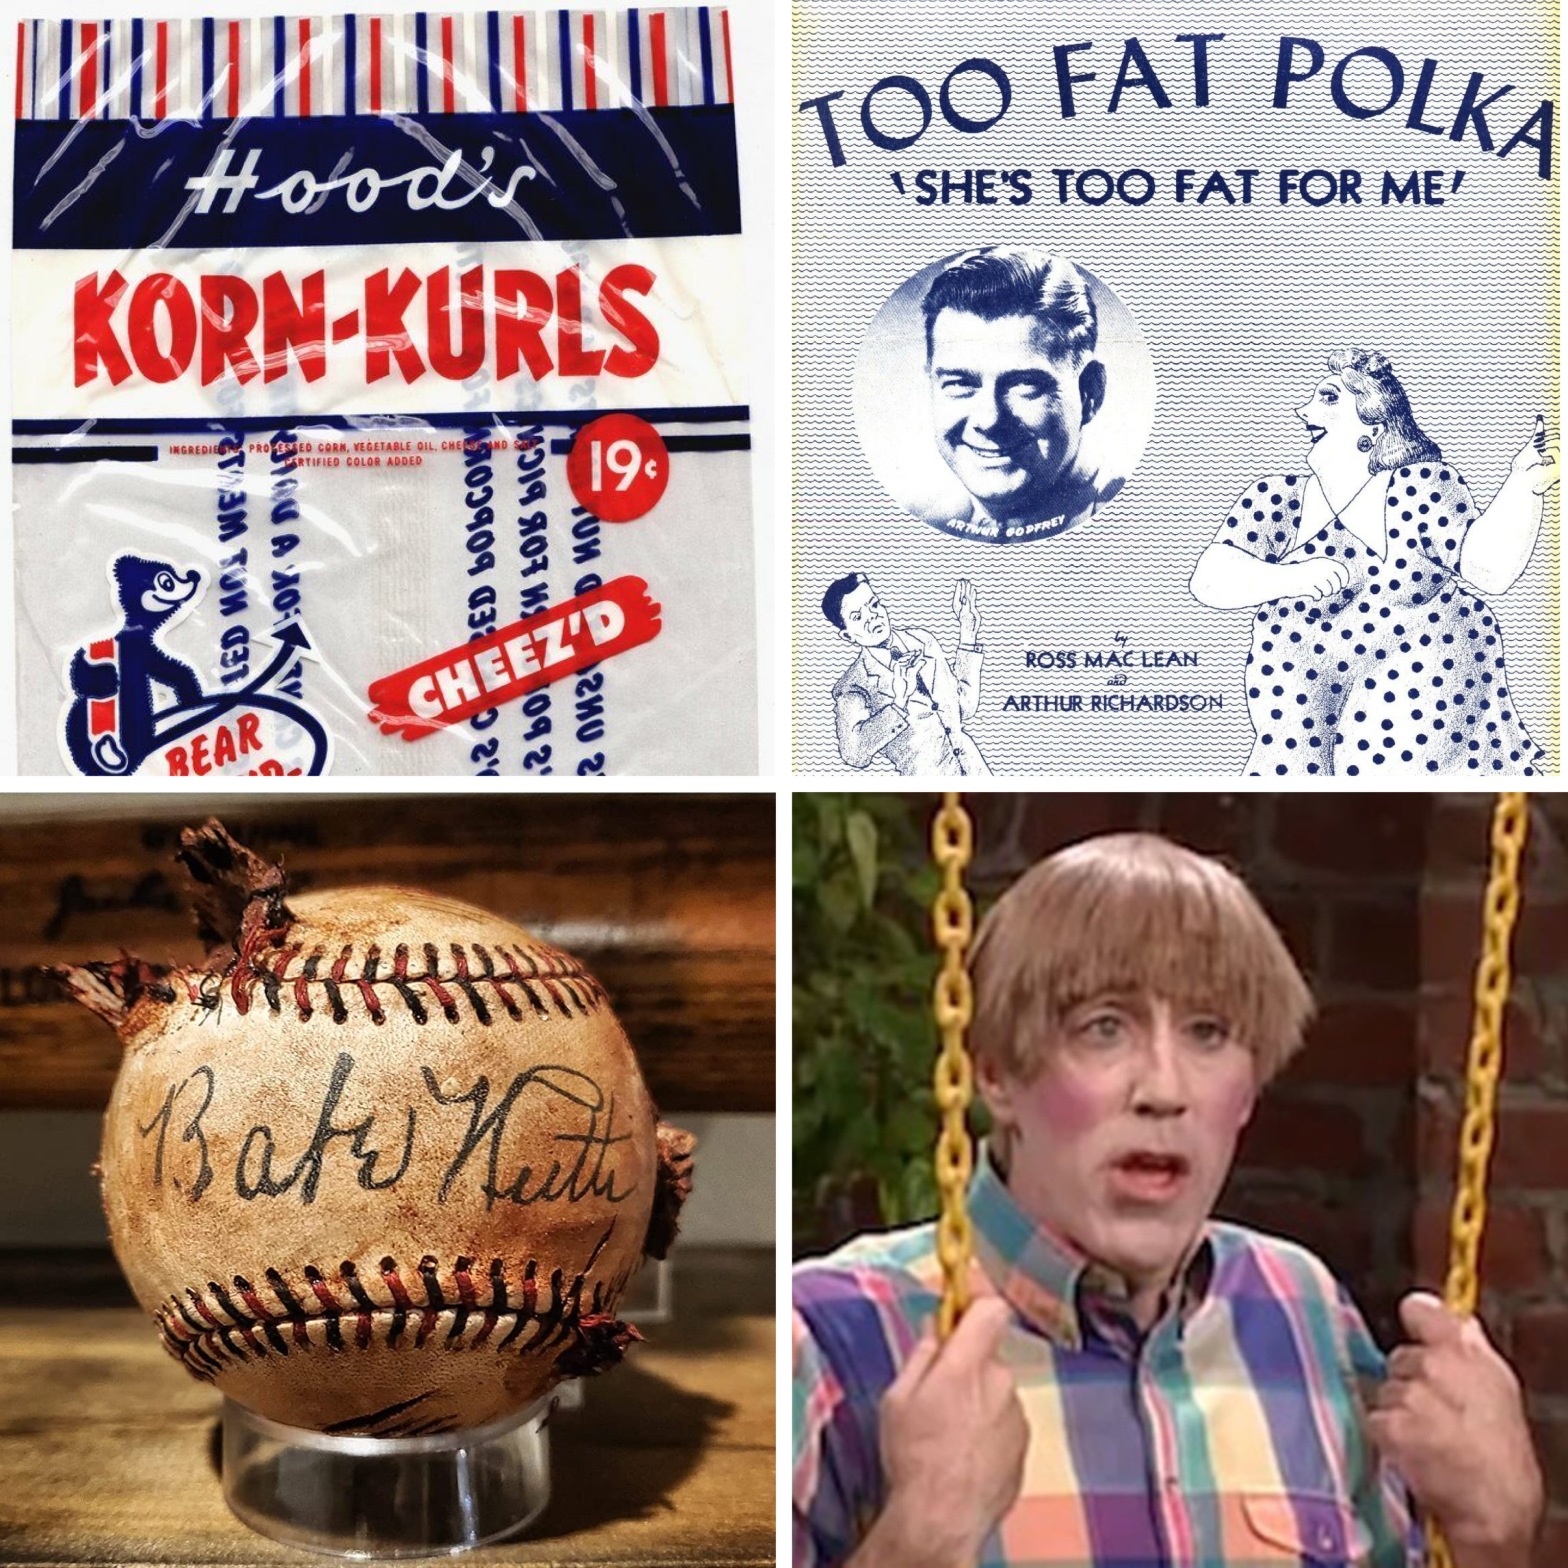 Korn-Kurls snacks, the Too Fat Polka, the baseball from The Sandlot, and Michael McDonald as Stuart in Mad TV.